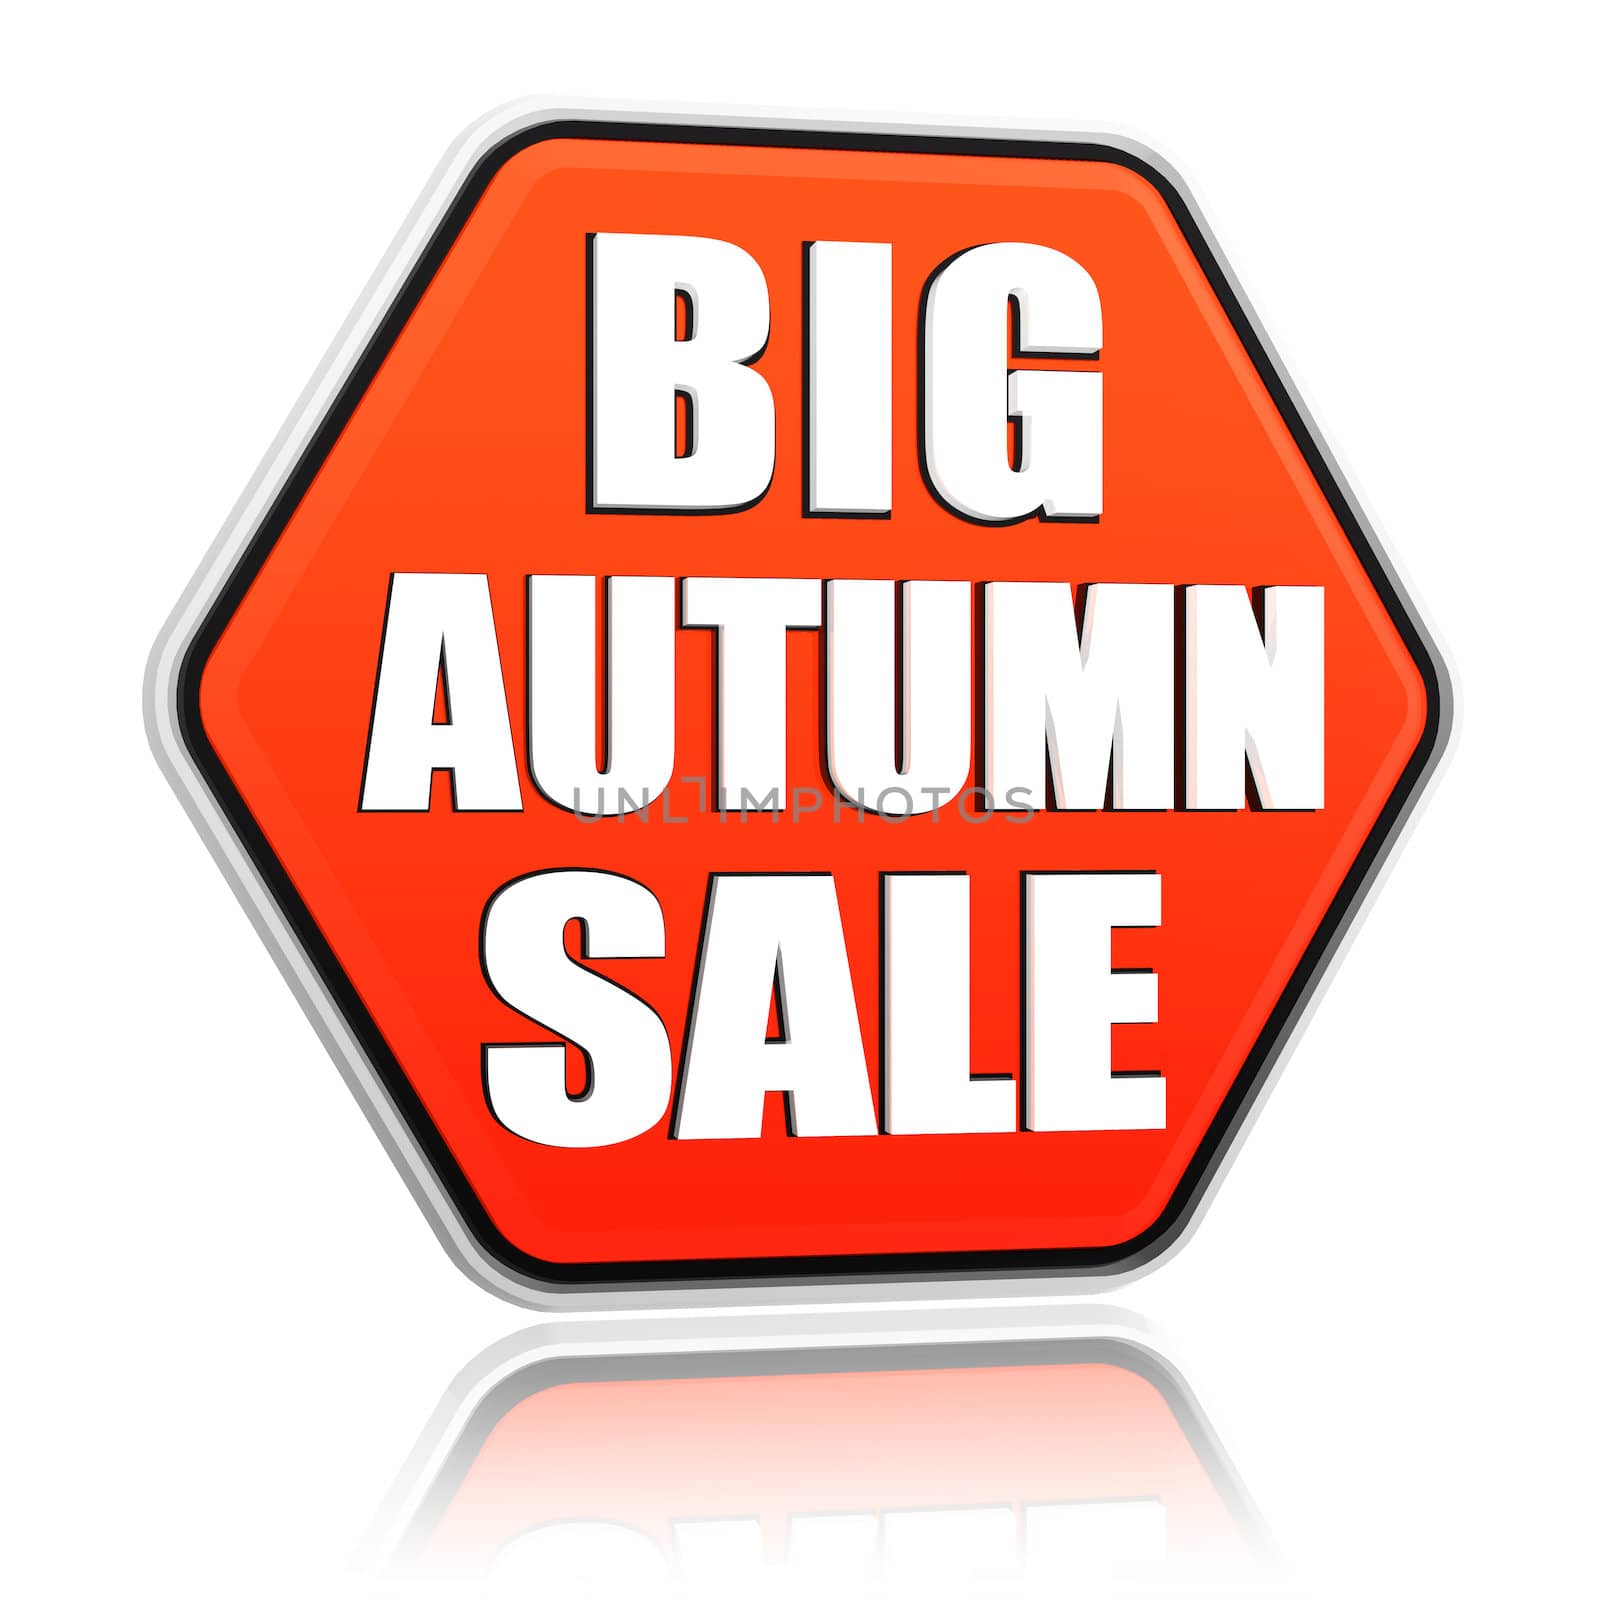 big autumn sale button - 3d orange hexagon banner with white text, business concept